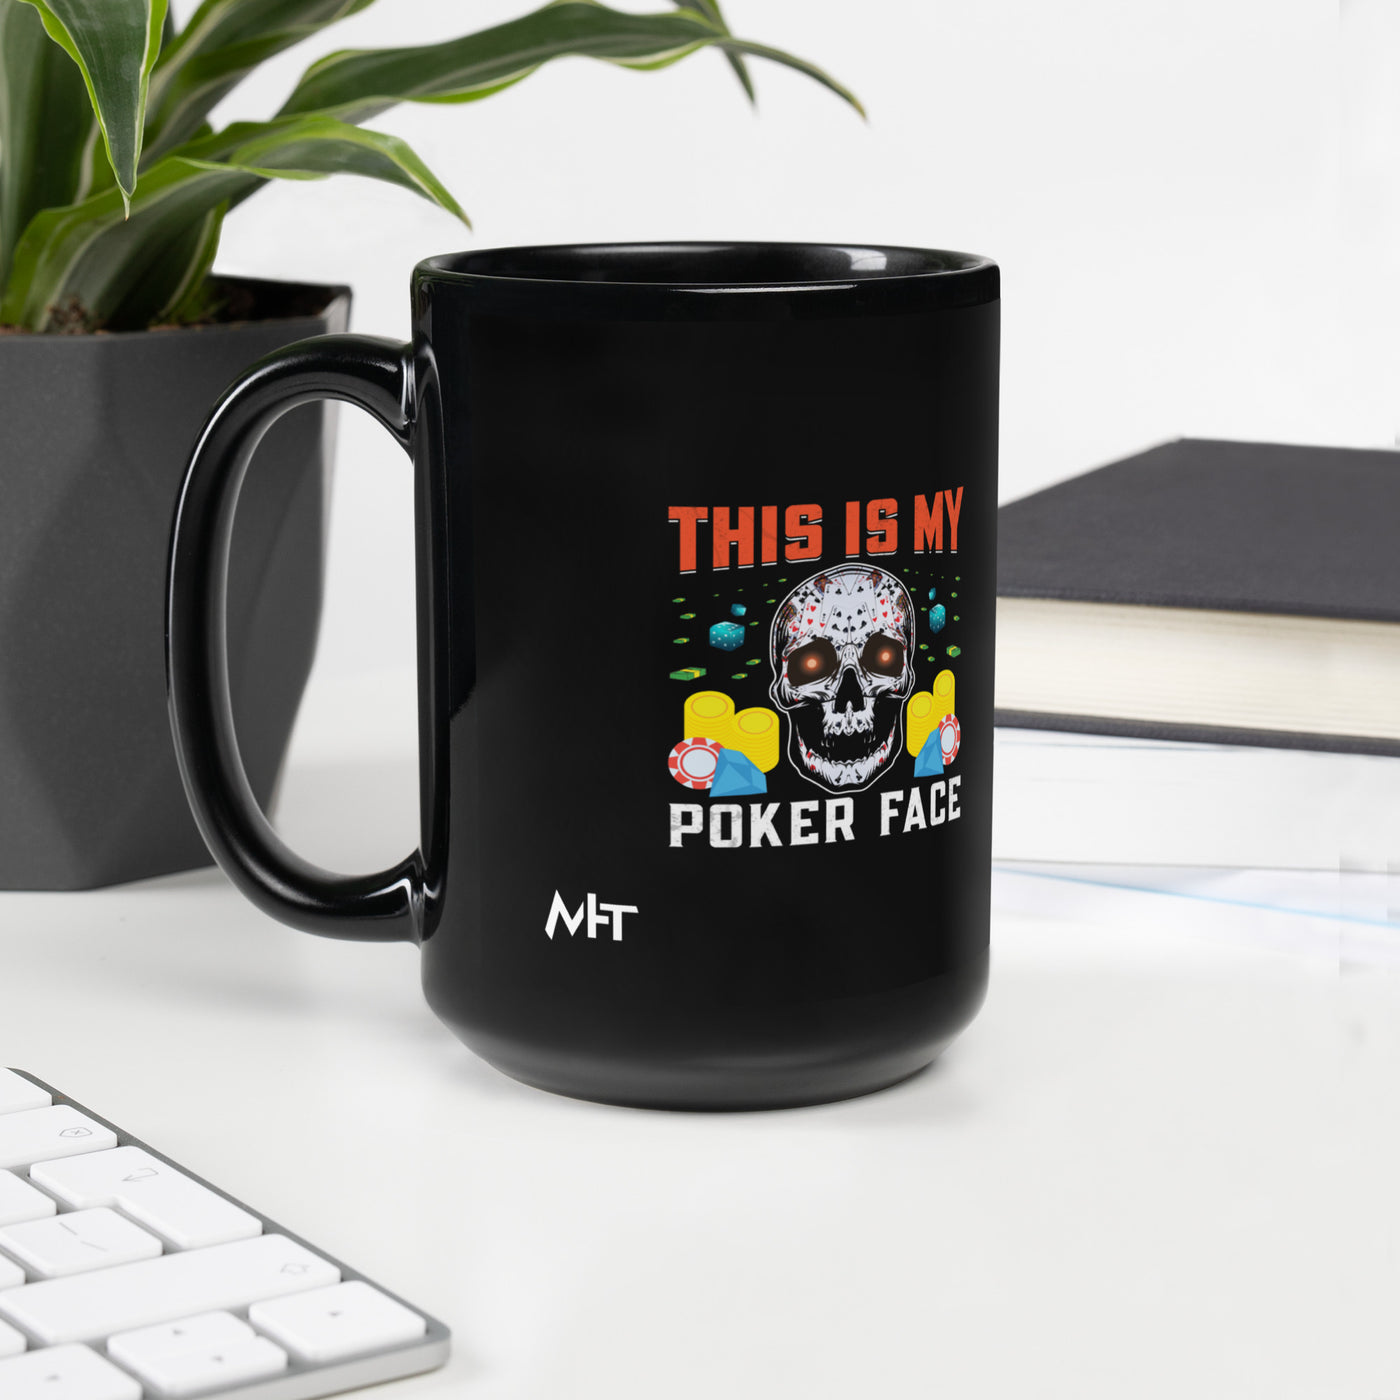 This is My Poker Face - Black Glossy Mug